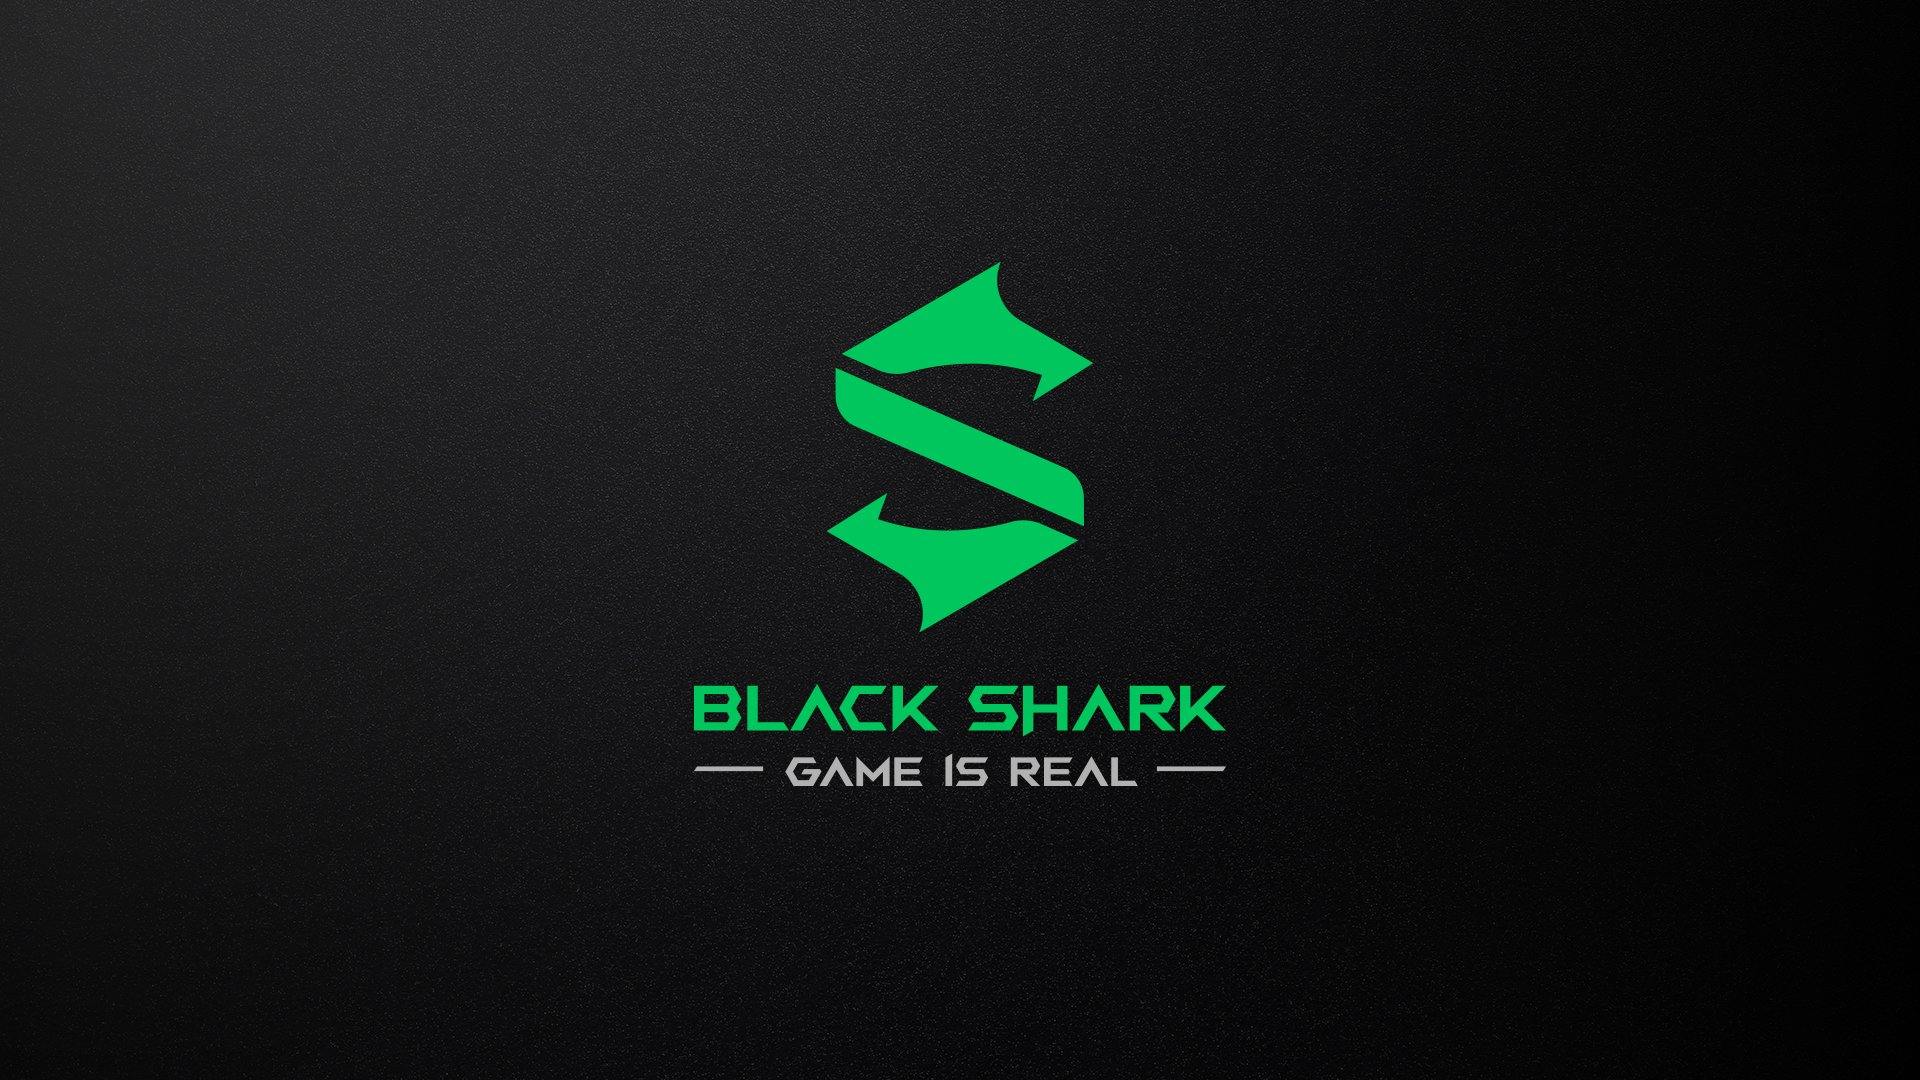 Black Shark Games Free Download